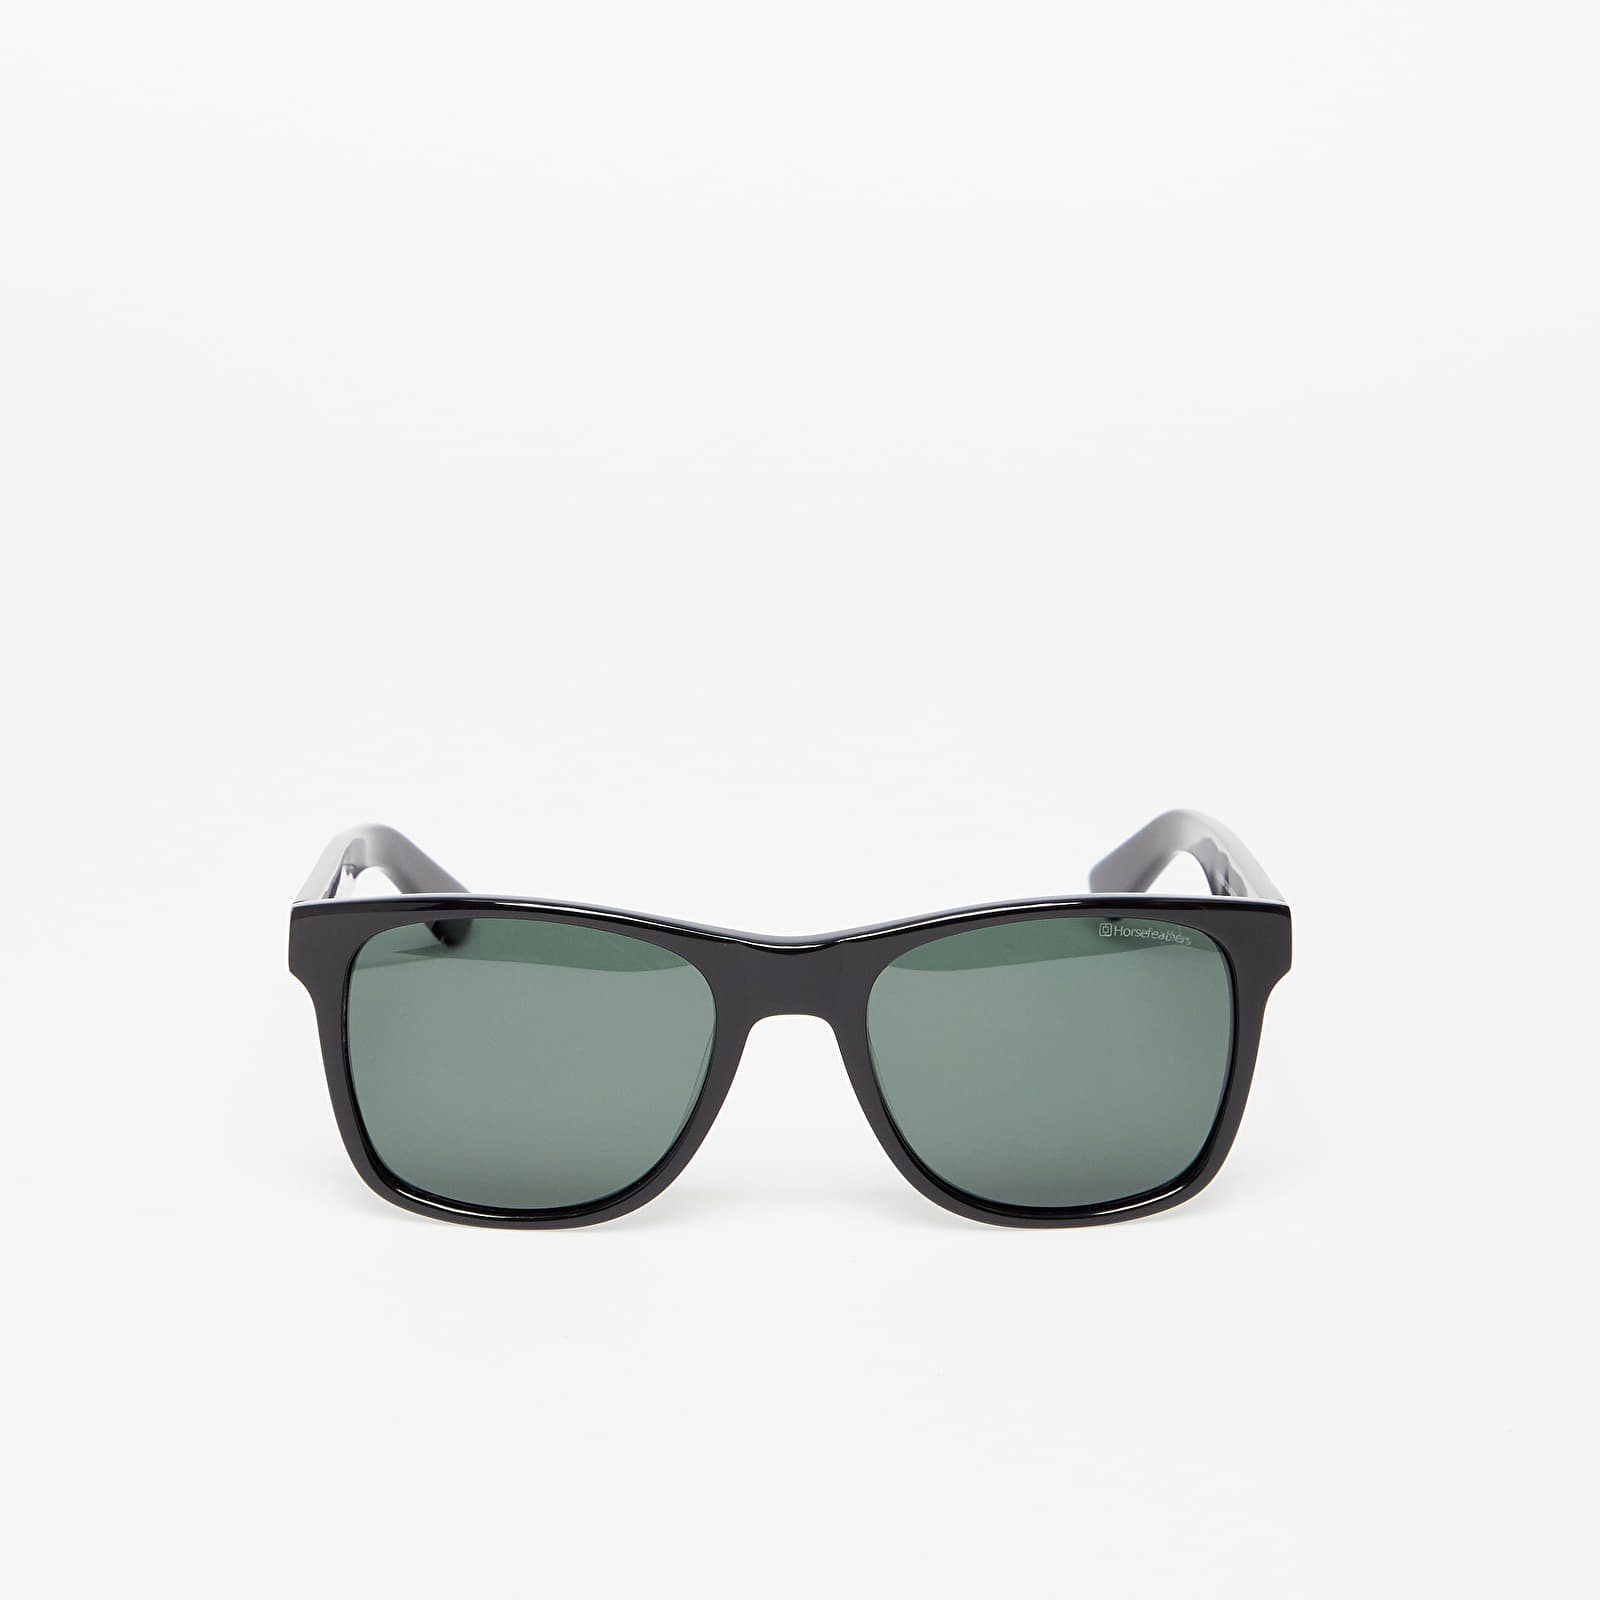 Sunglasses Horsefeathers Foster Sunglasses Gloss Black/Gray Green